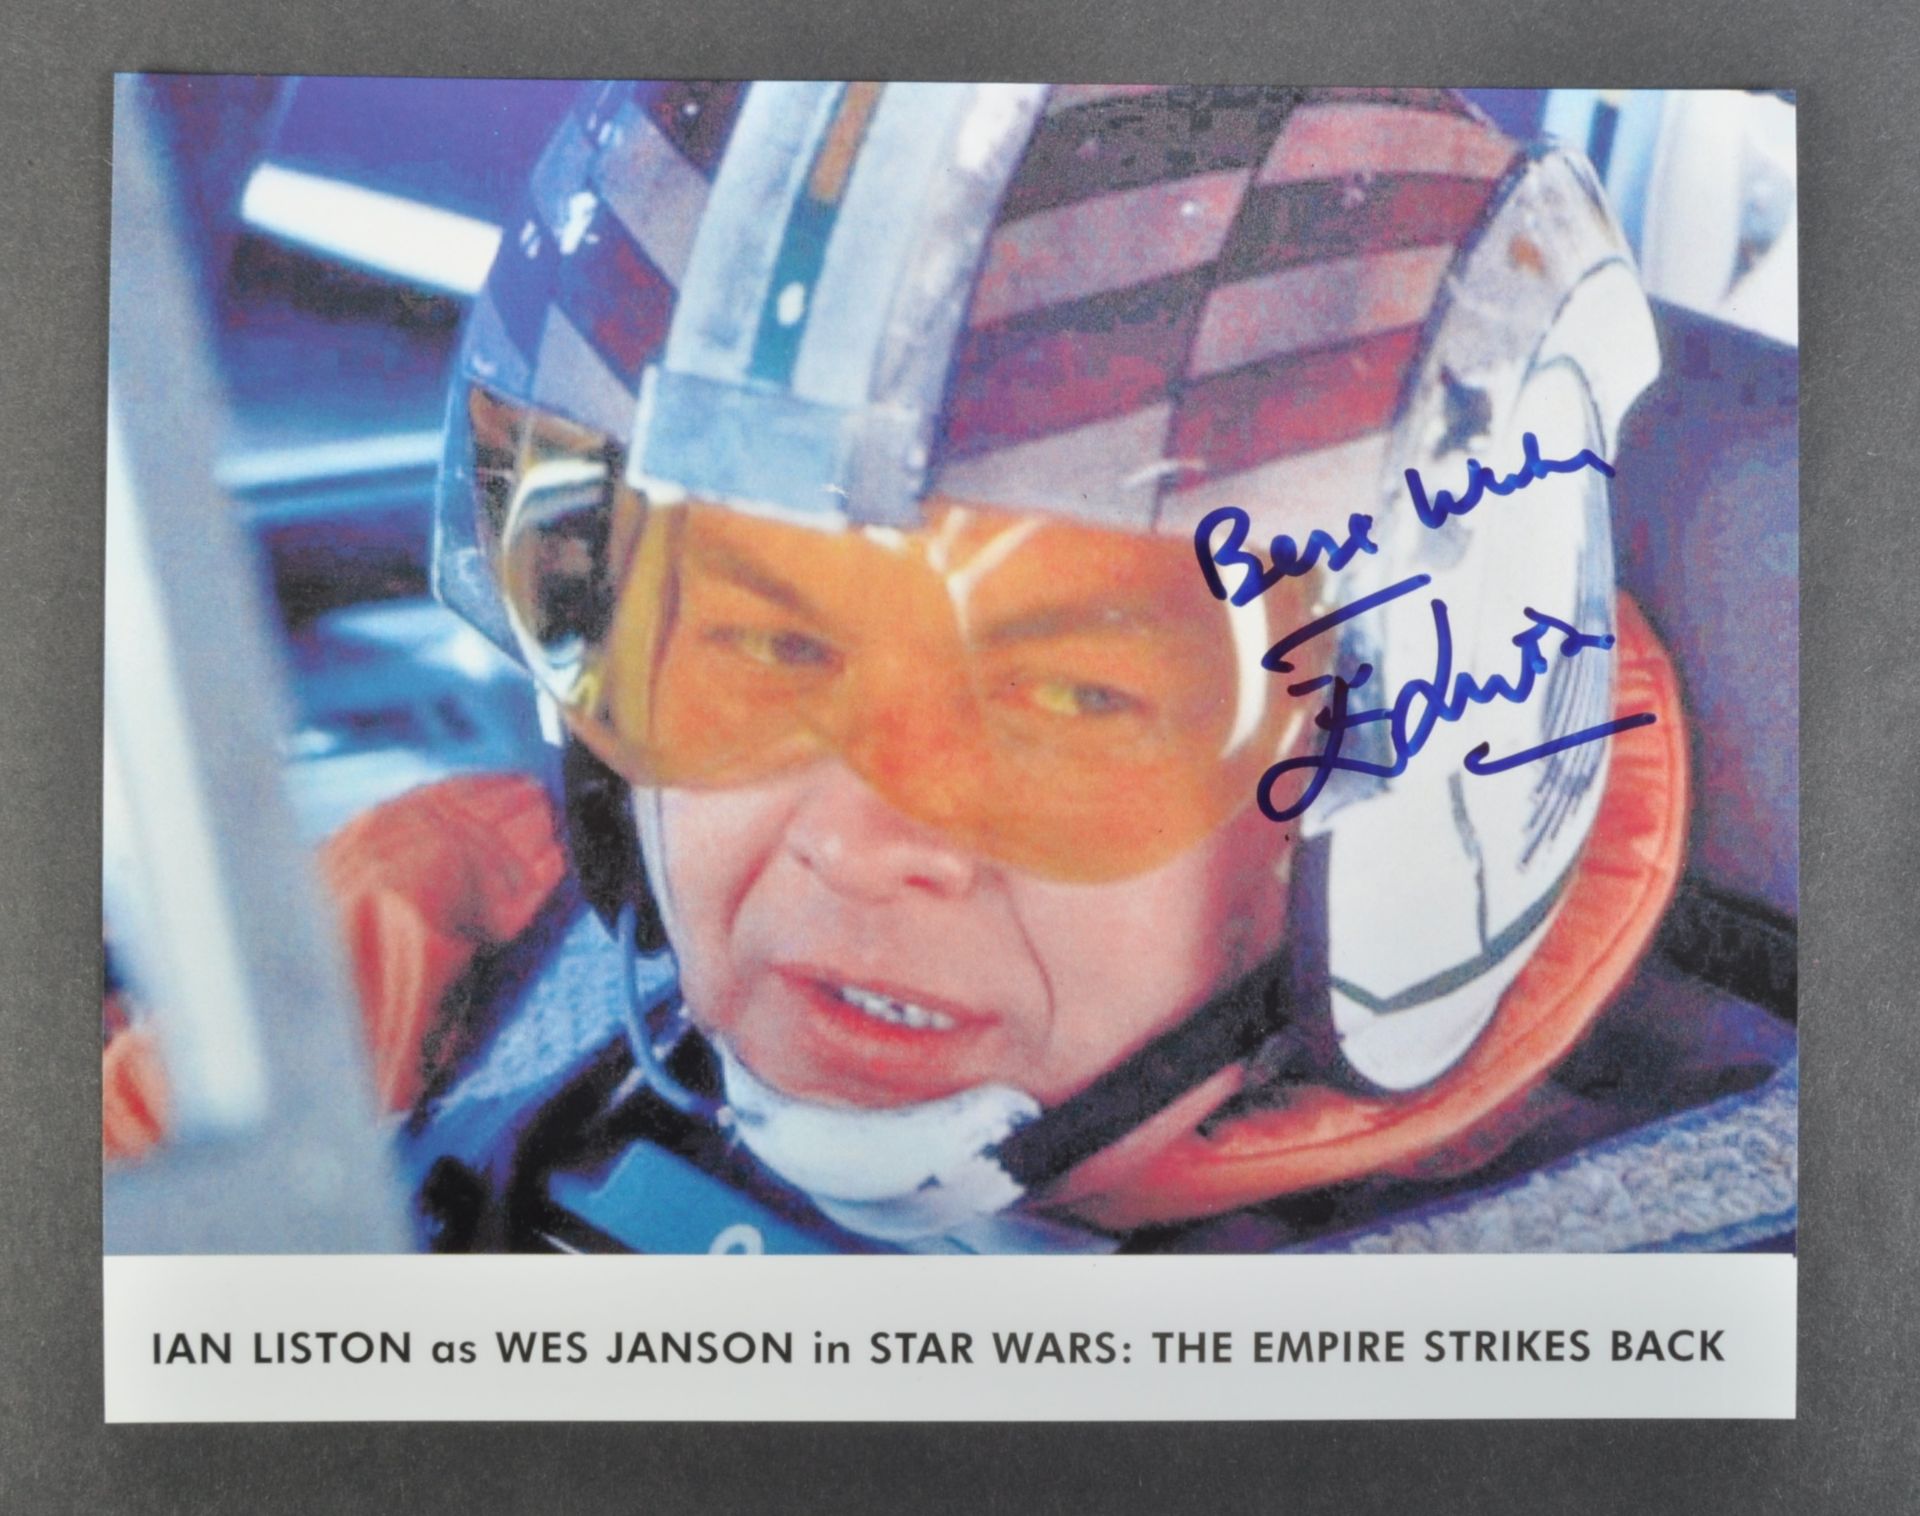 STAR WARS - IAN LISTON (1948-2016 - WES JANSON) - SIGNED 8X10" PHOTOGRAPH